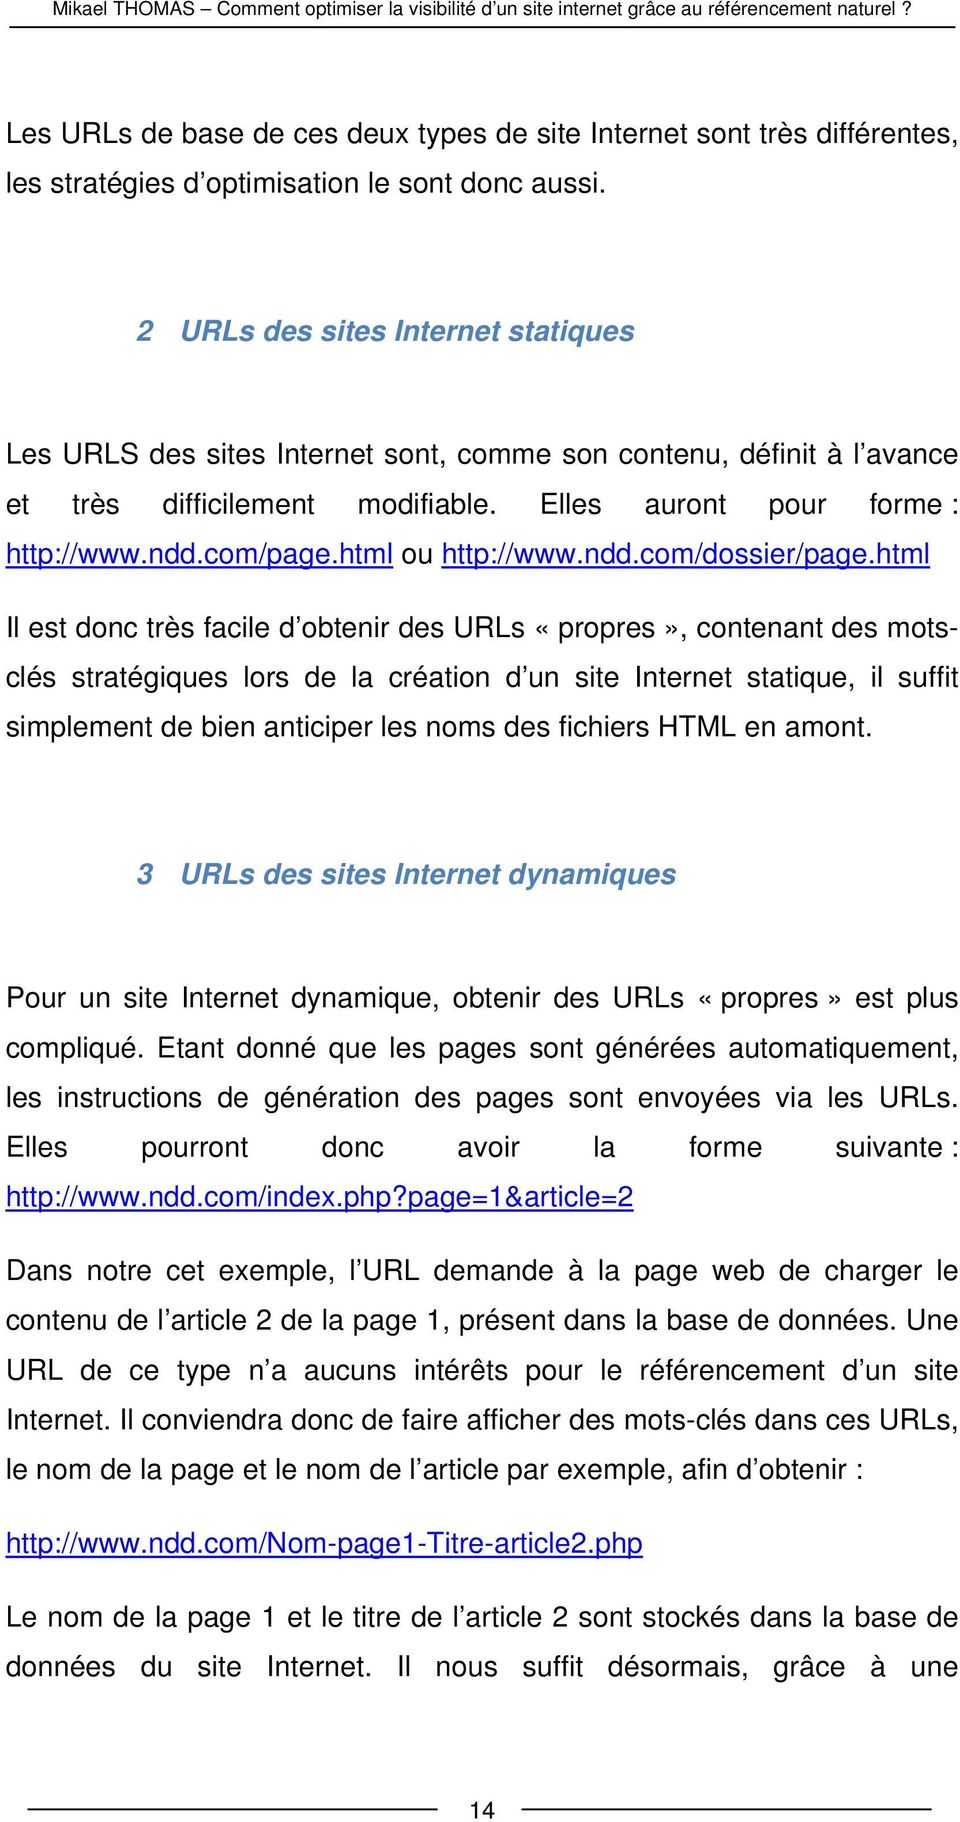 html ou http://www.ndd.com/dossier/page.